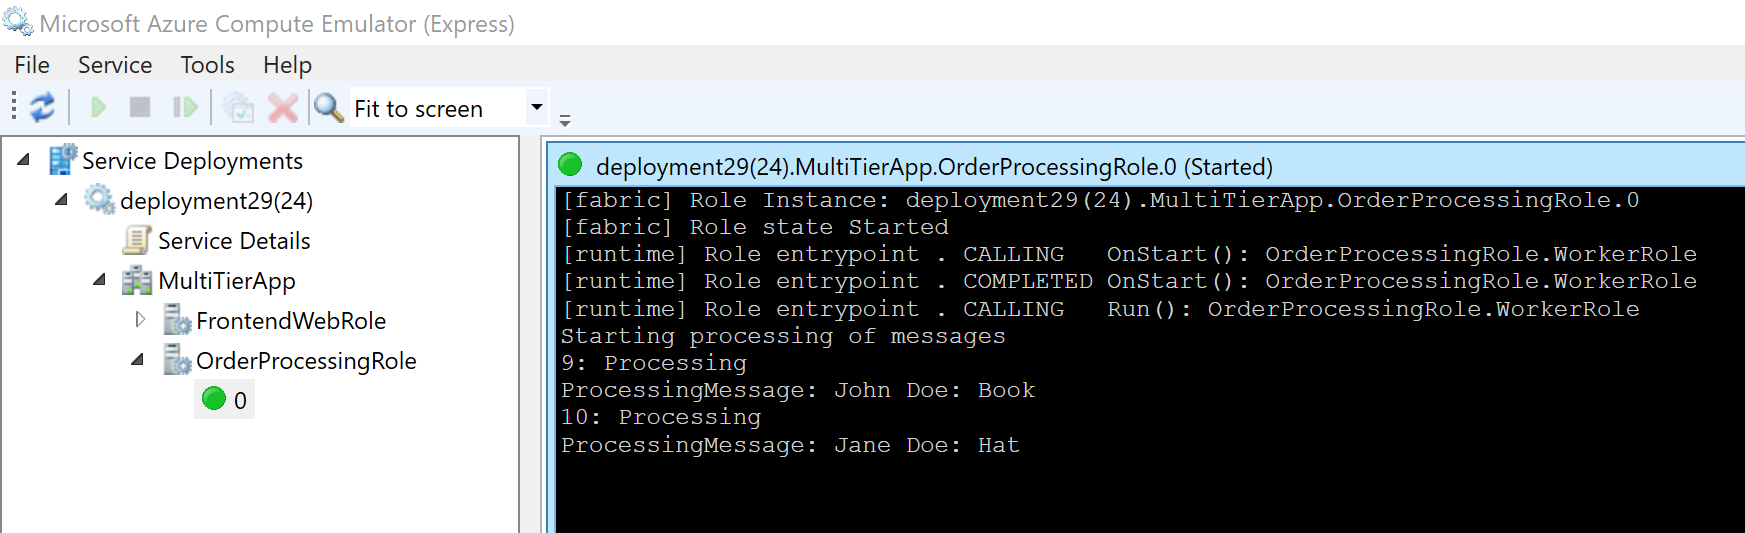 Screenshot of the Azure Compute Emulator (Express) dialog box.